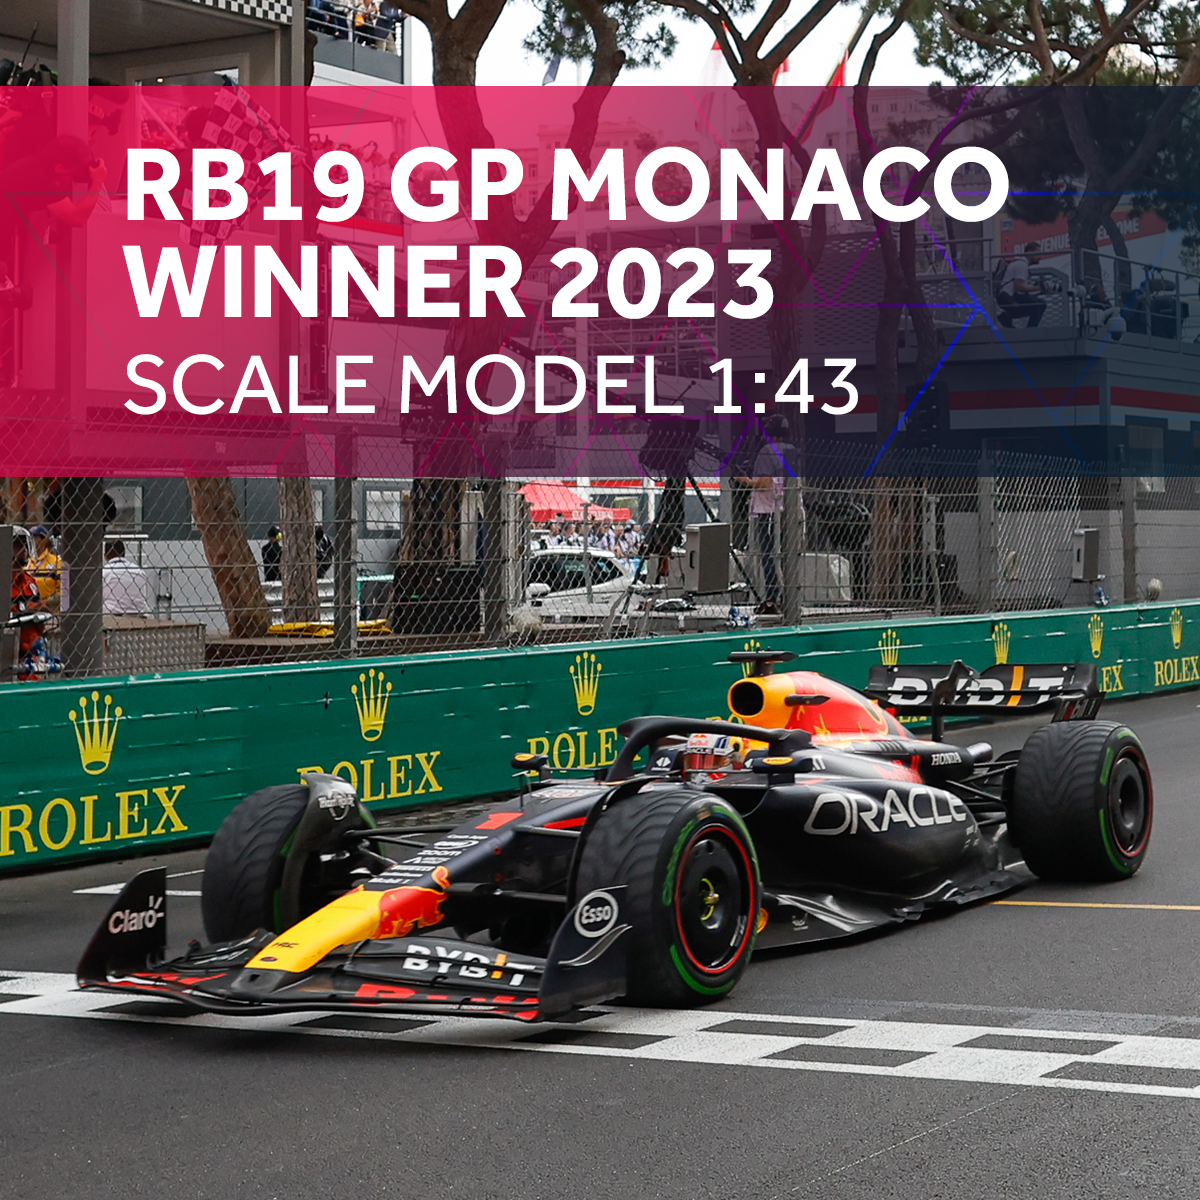 1:43 RB19 GP Monaco 2023 - Winner